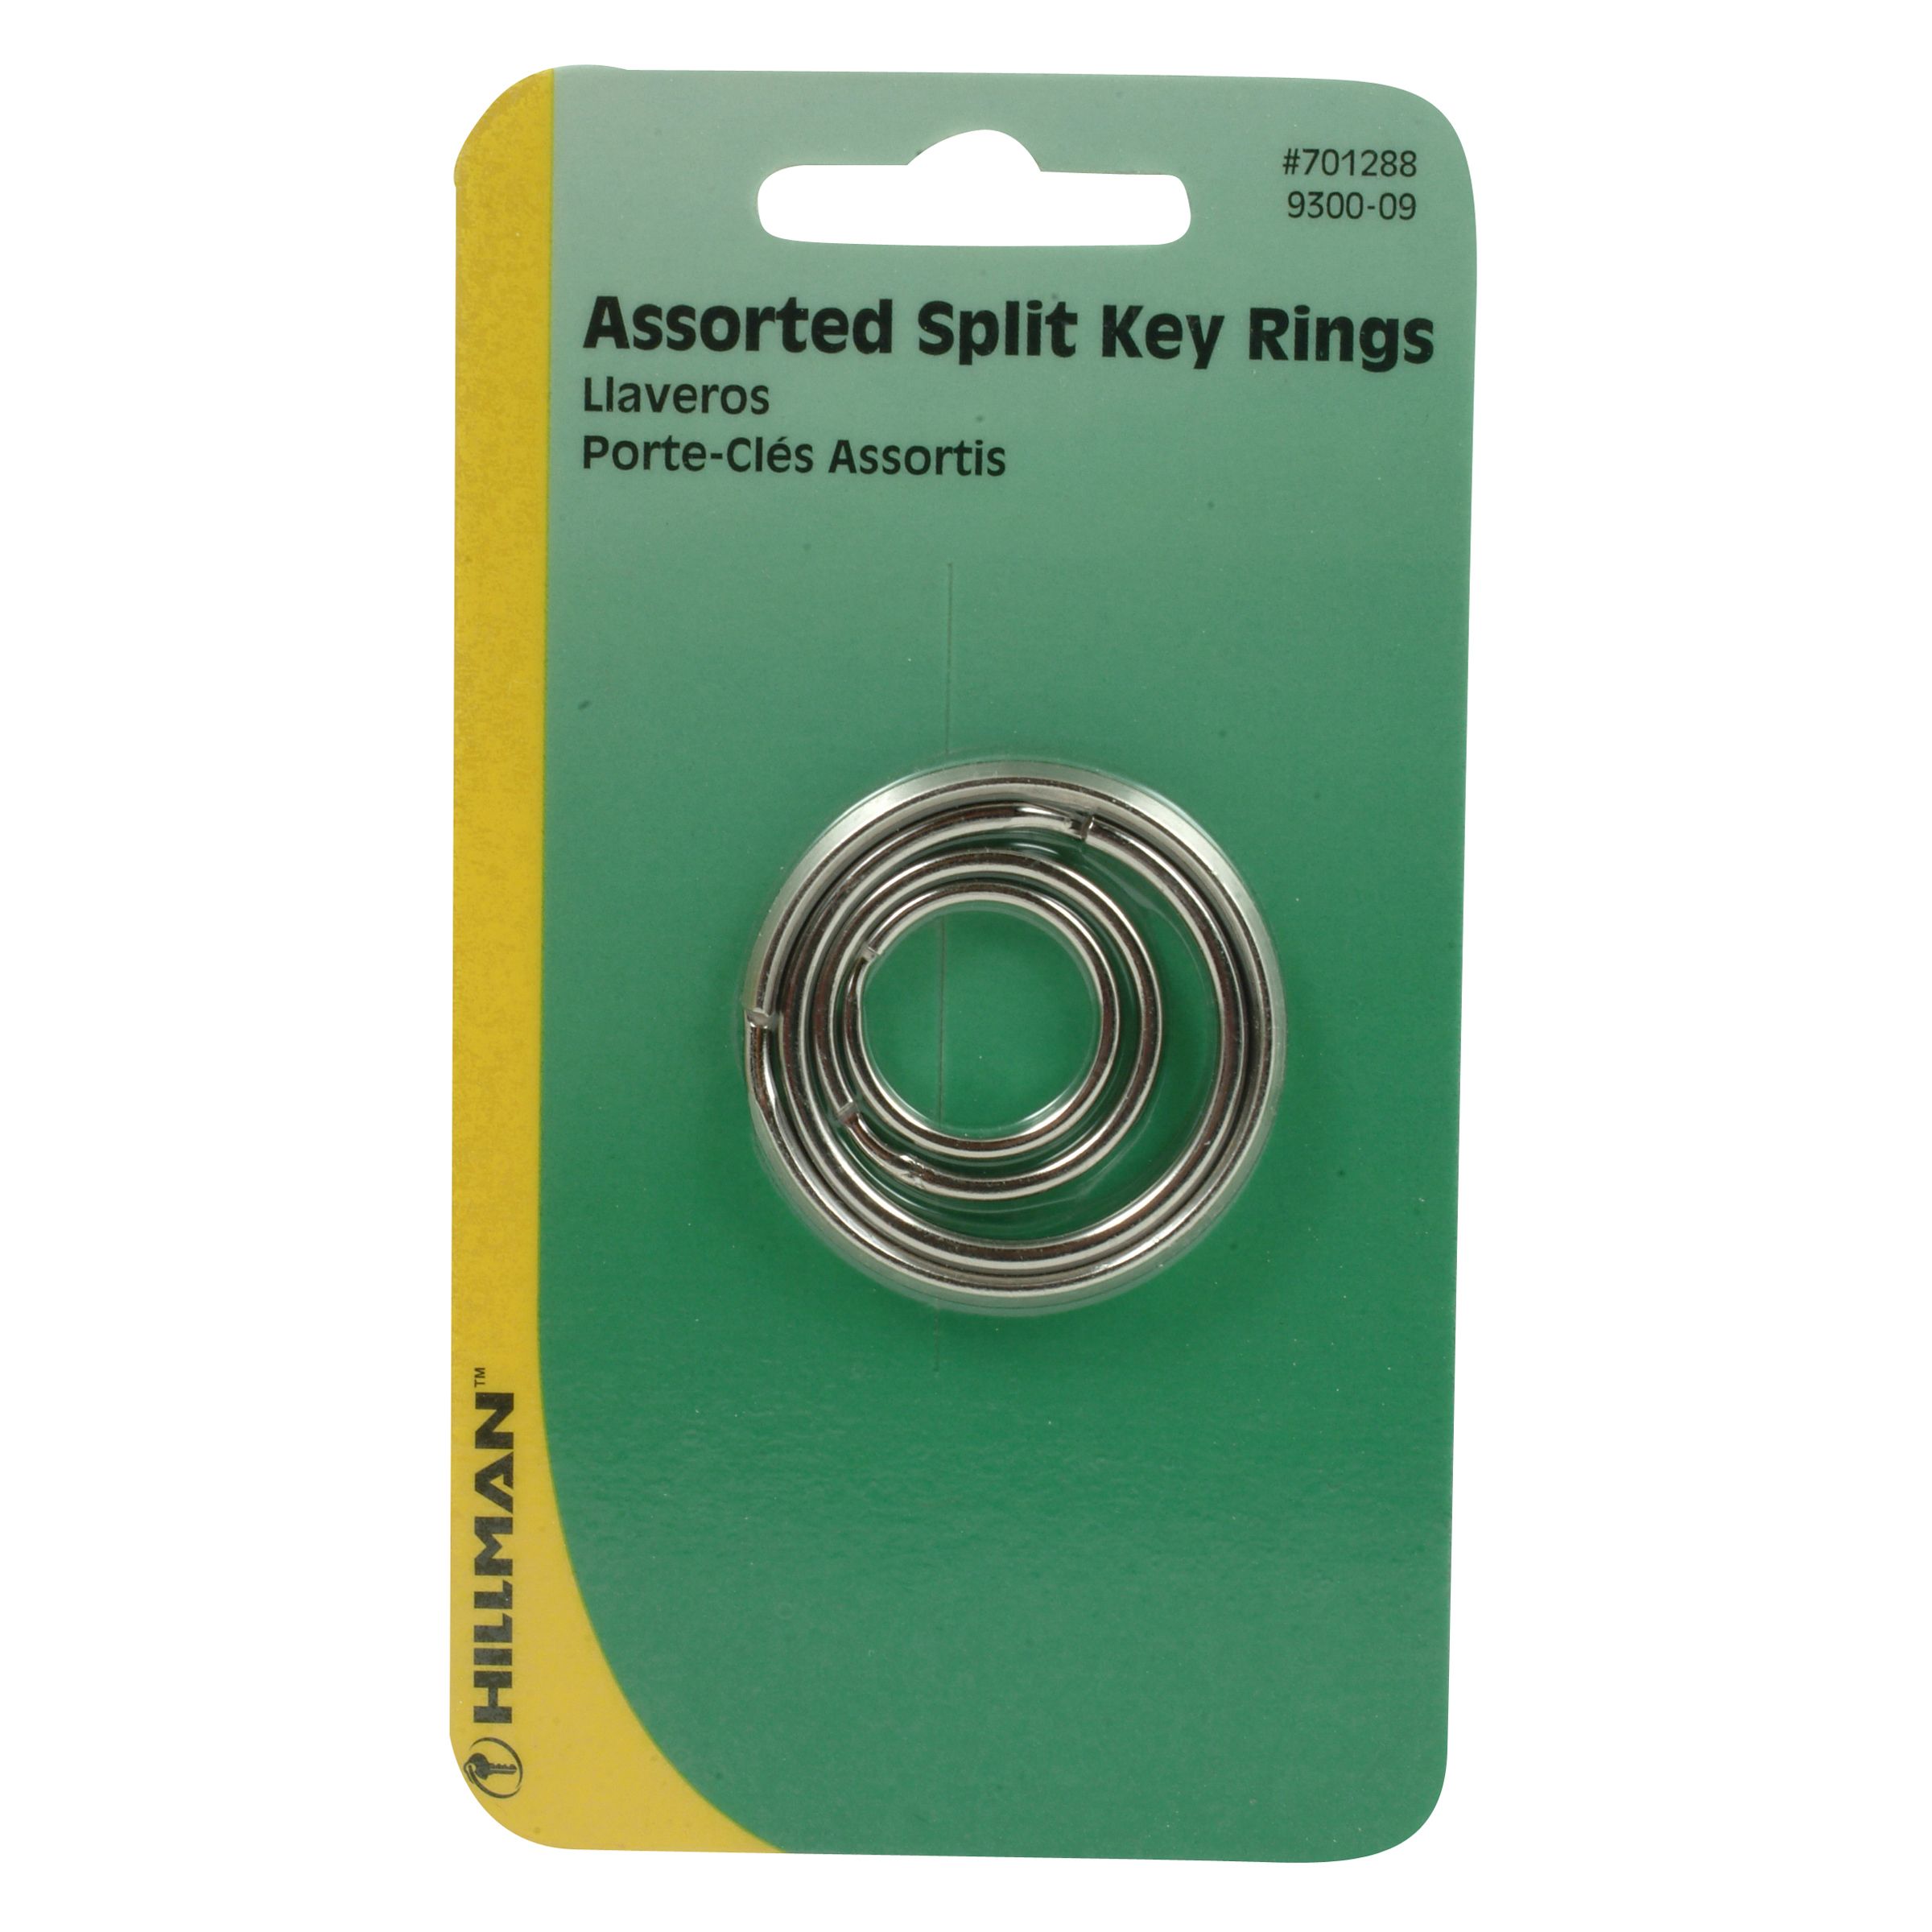 Assorted Split Key Rings